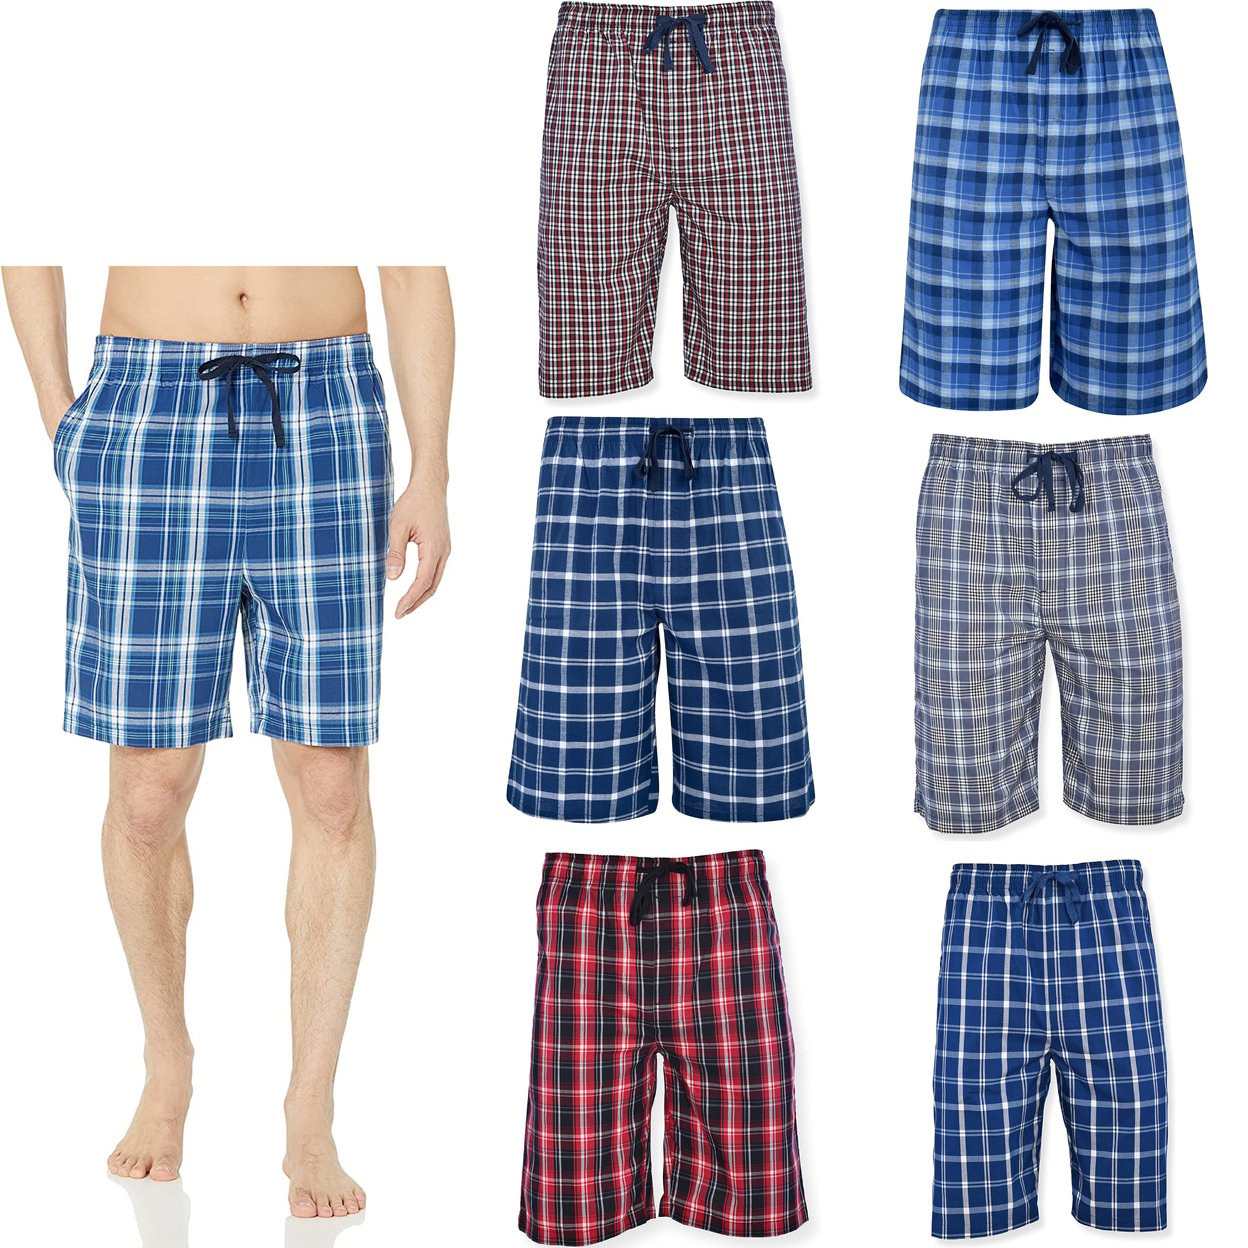 2-Pack: Men's Ultra Soft Plaid Lounge Pajama Sleep Wear Shorts - Black & Black, X-large